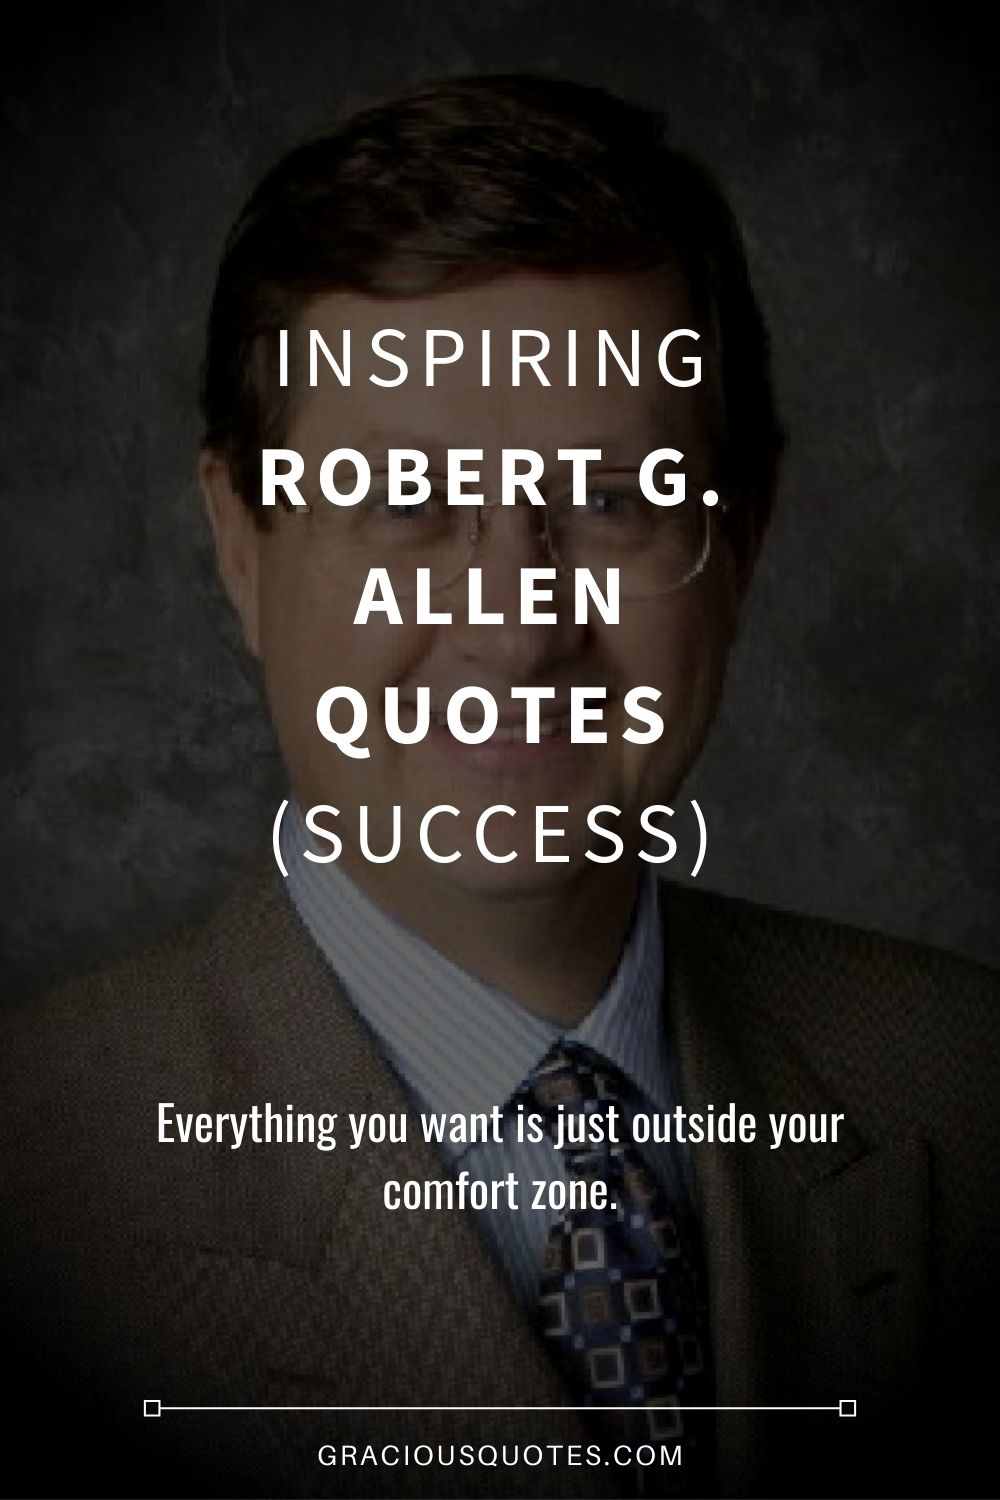 Inspiring Robert G. Allen Quotes (SUCCESS) - Gracious Quotes